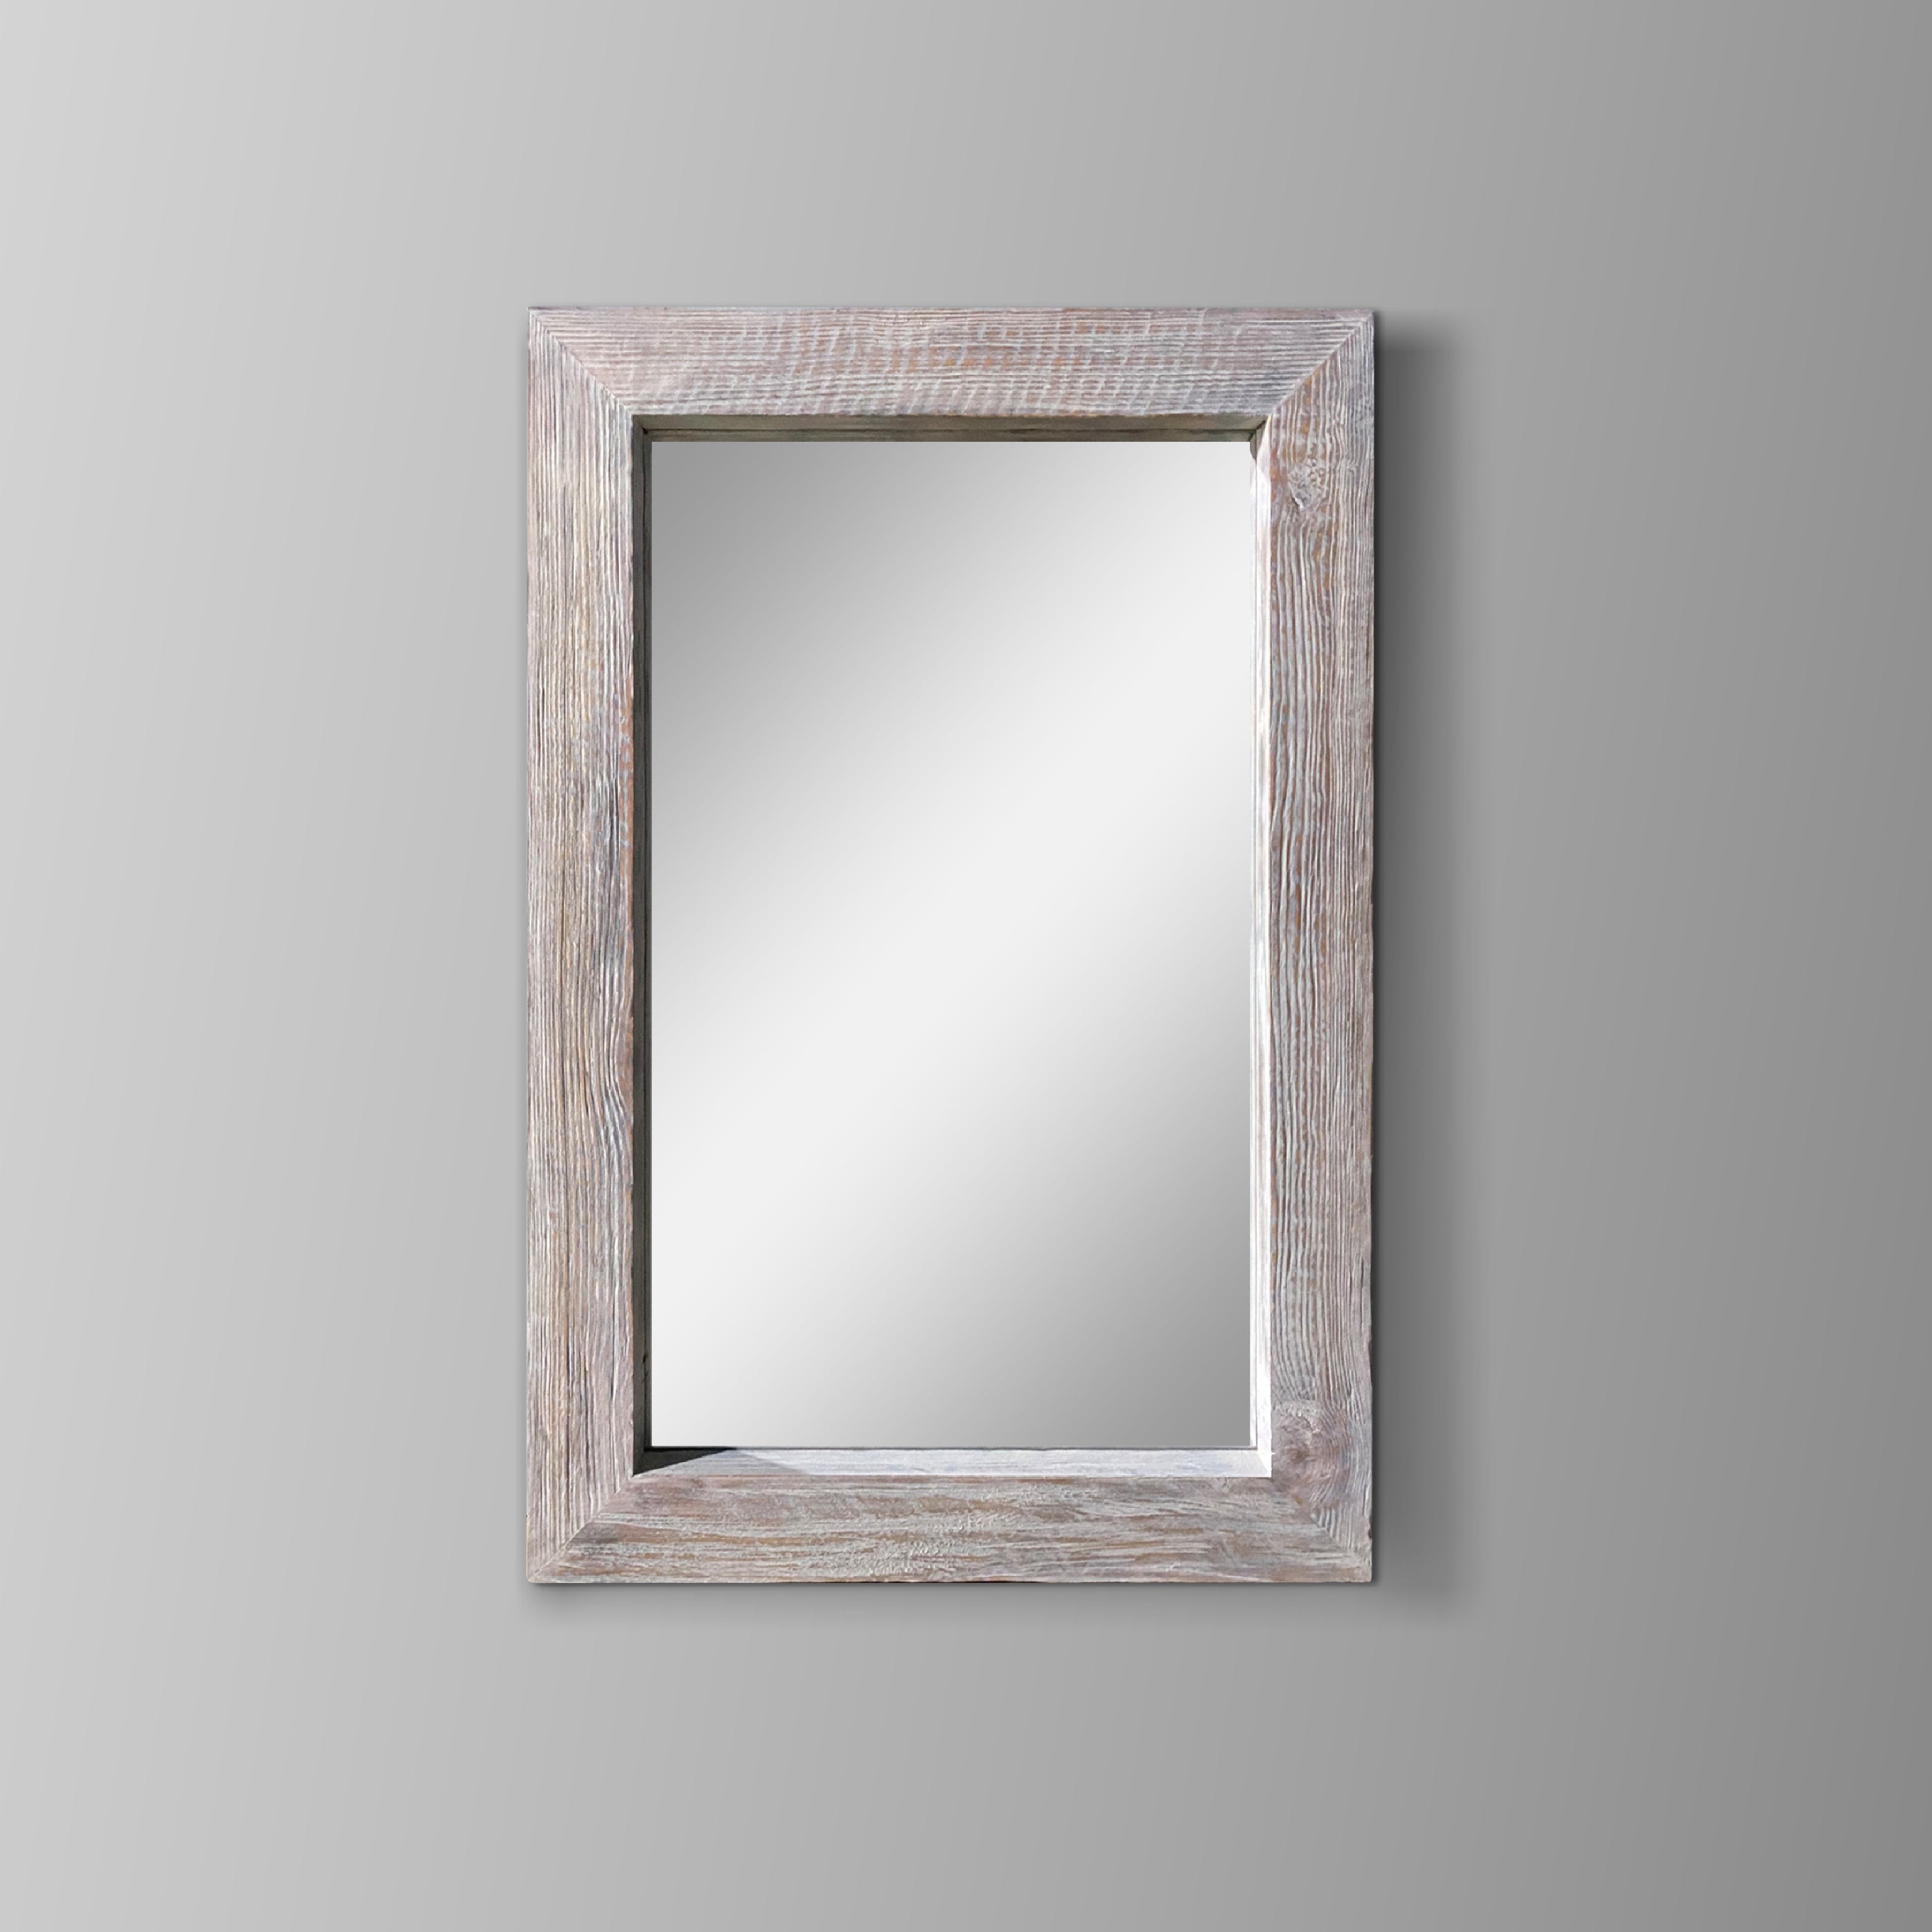 Rectangular Wooden Frame Wall Mirror, Grain Details - Antique White